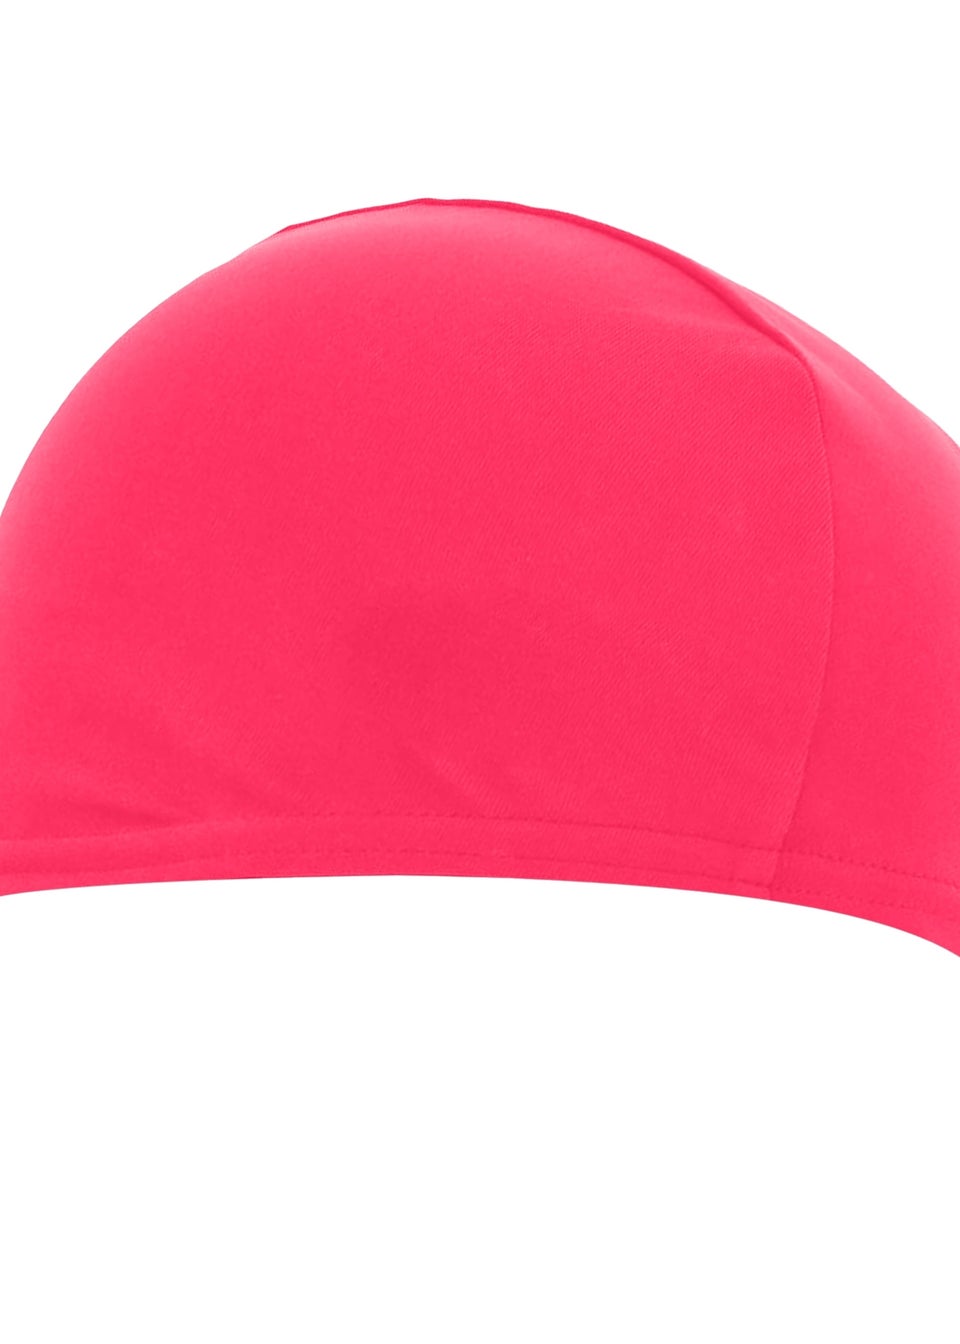 Speedo Kids Pink Polyester Swim Cap